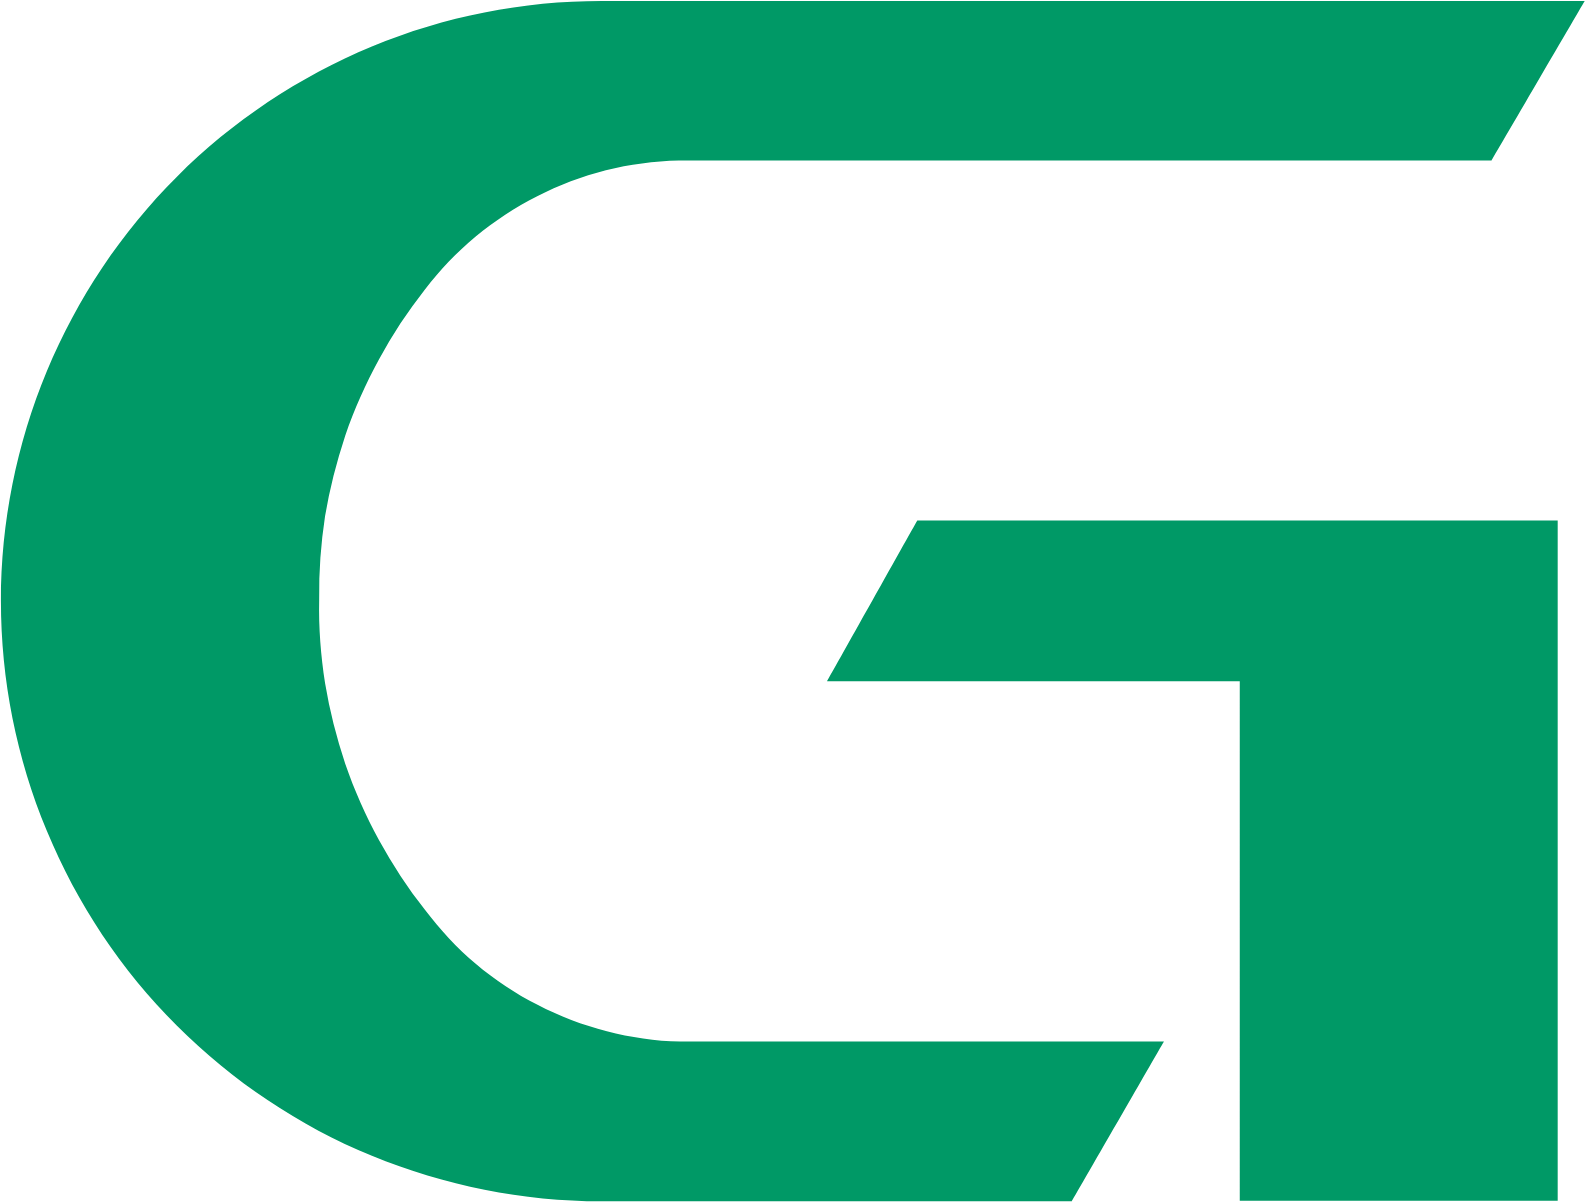 Global Unichip Corp. logo (transparent PNG)